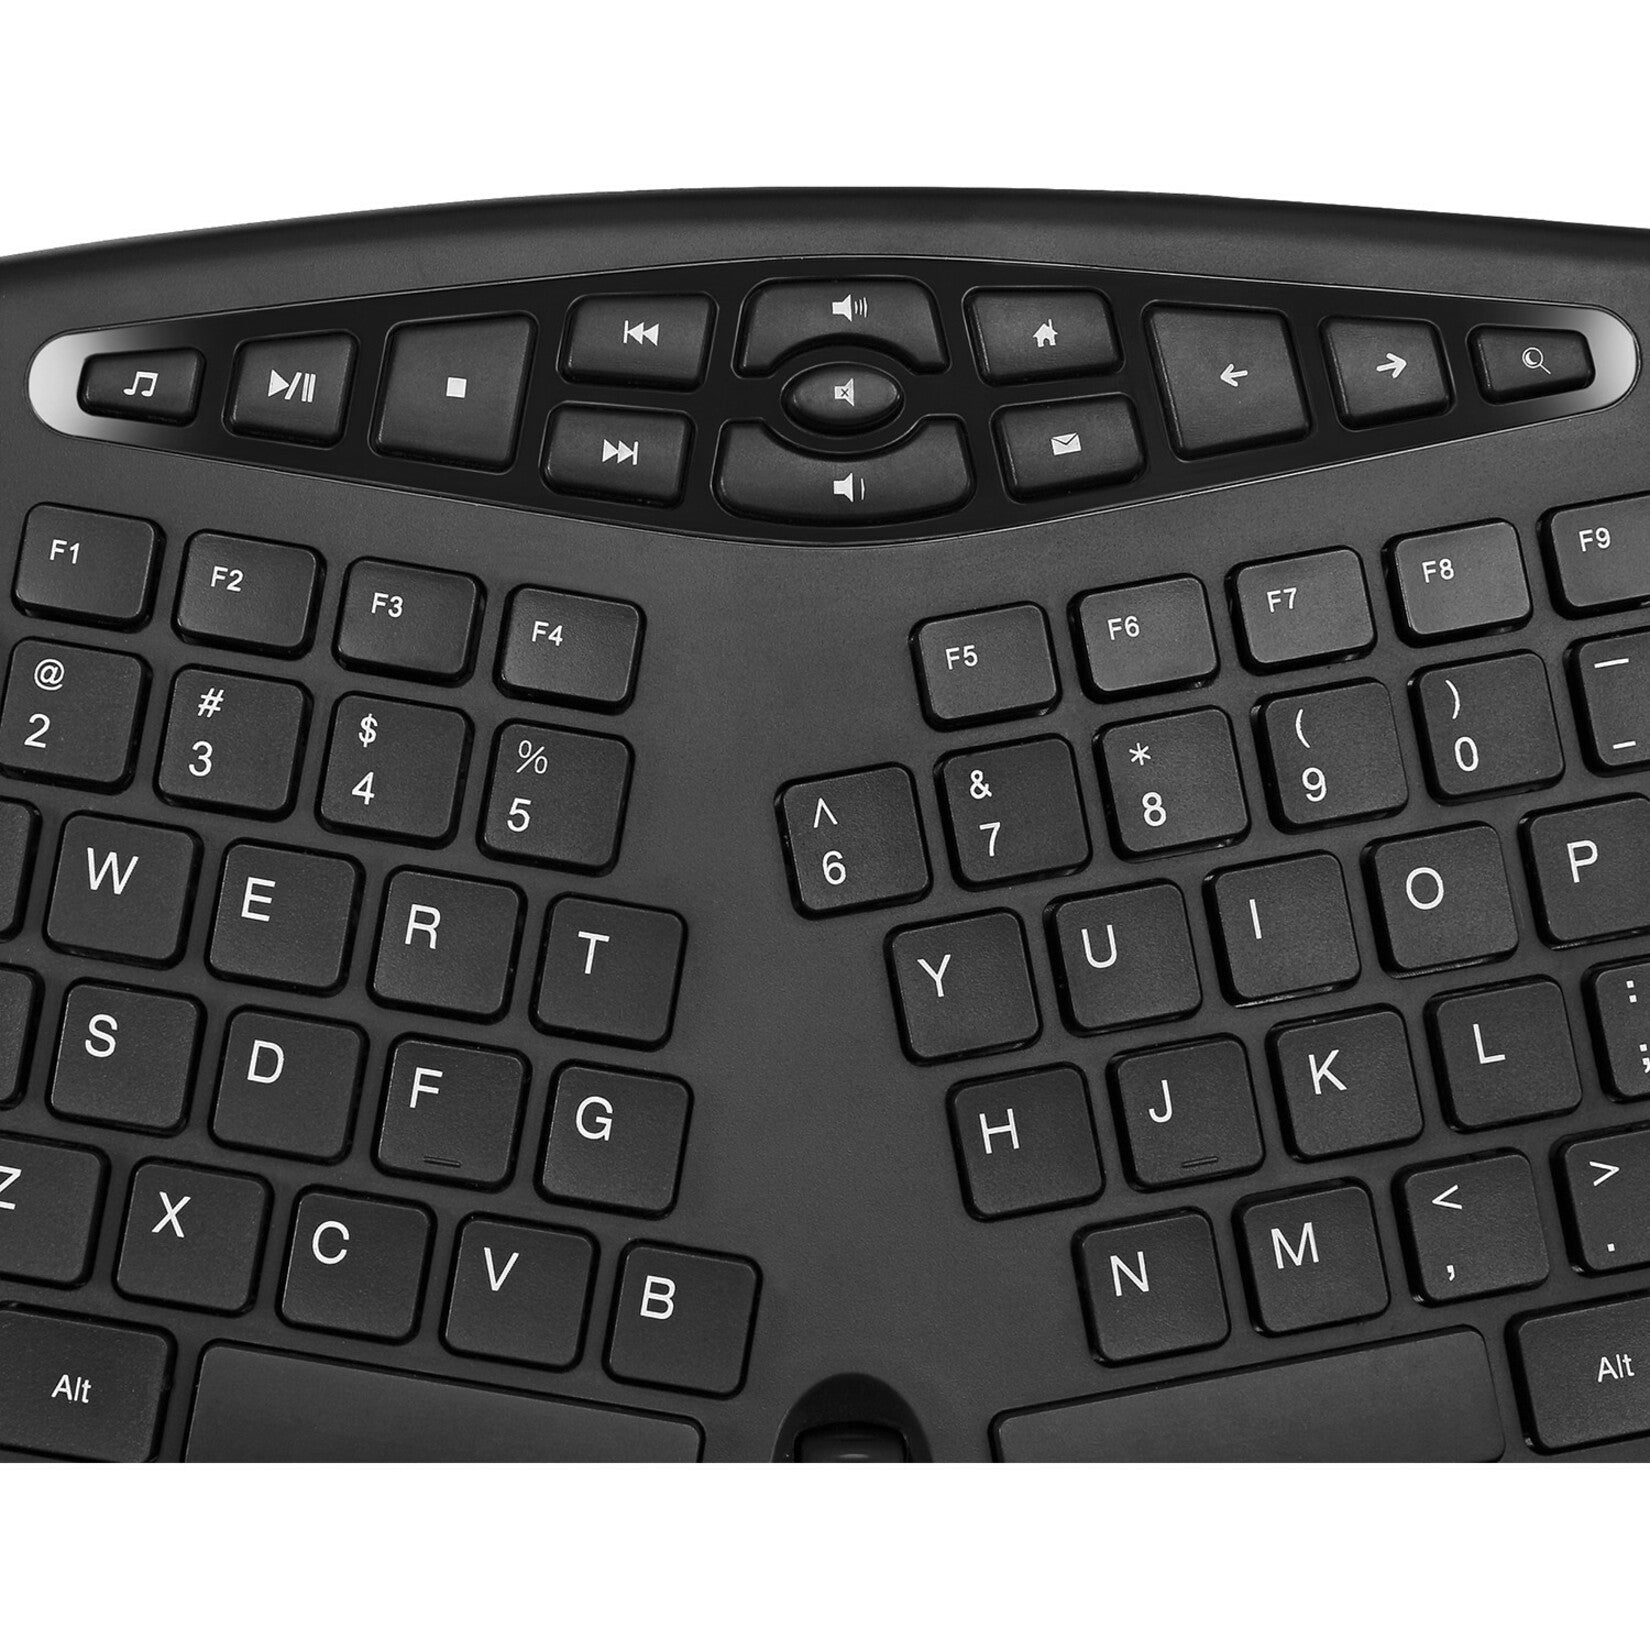 Adesso WKB-1600CB TruForm Wireless Ergonomic Keyboard And Optical Mouse, Low-Profile Keys, Split Keyboard, Palm Rest, Ergonomic